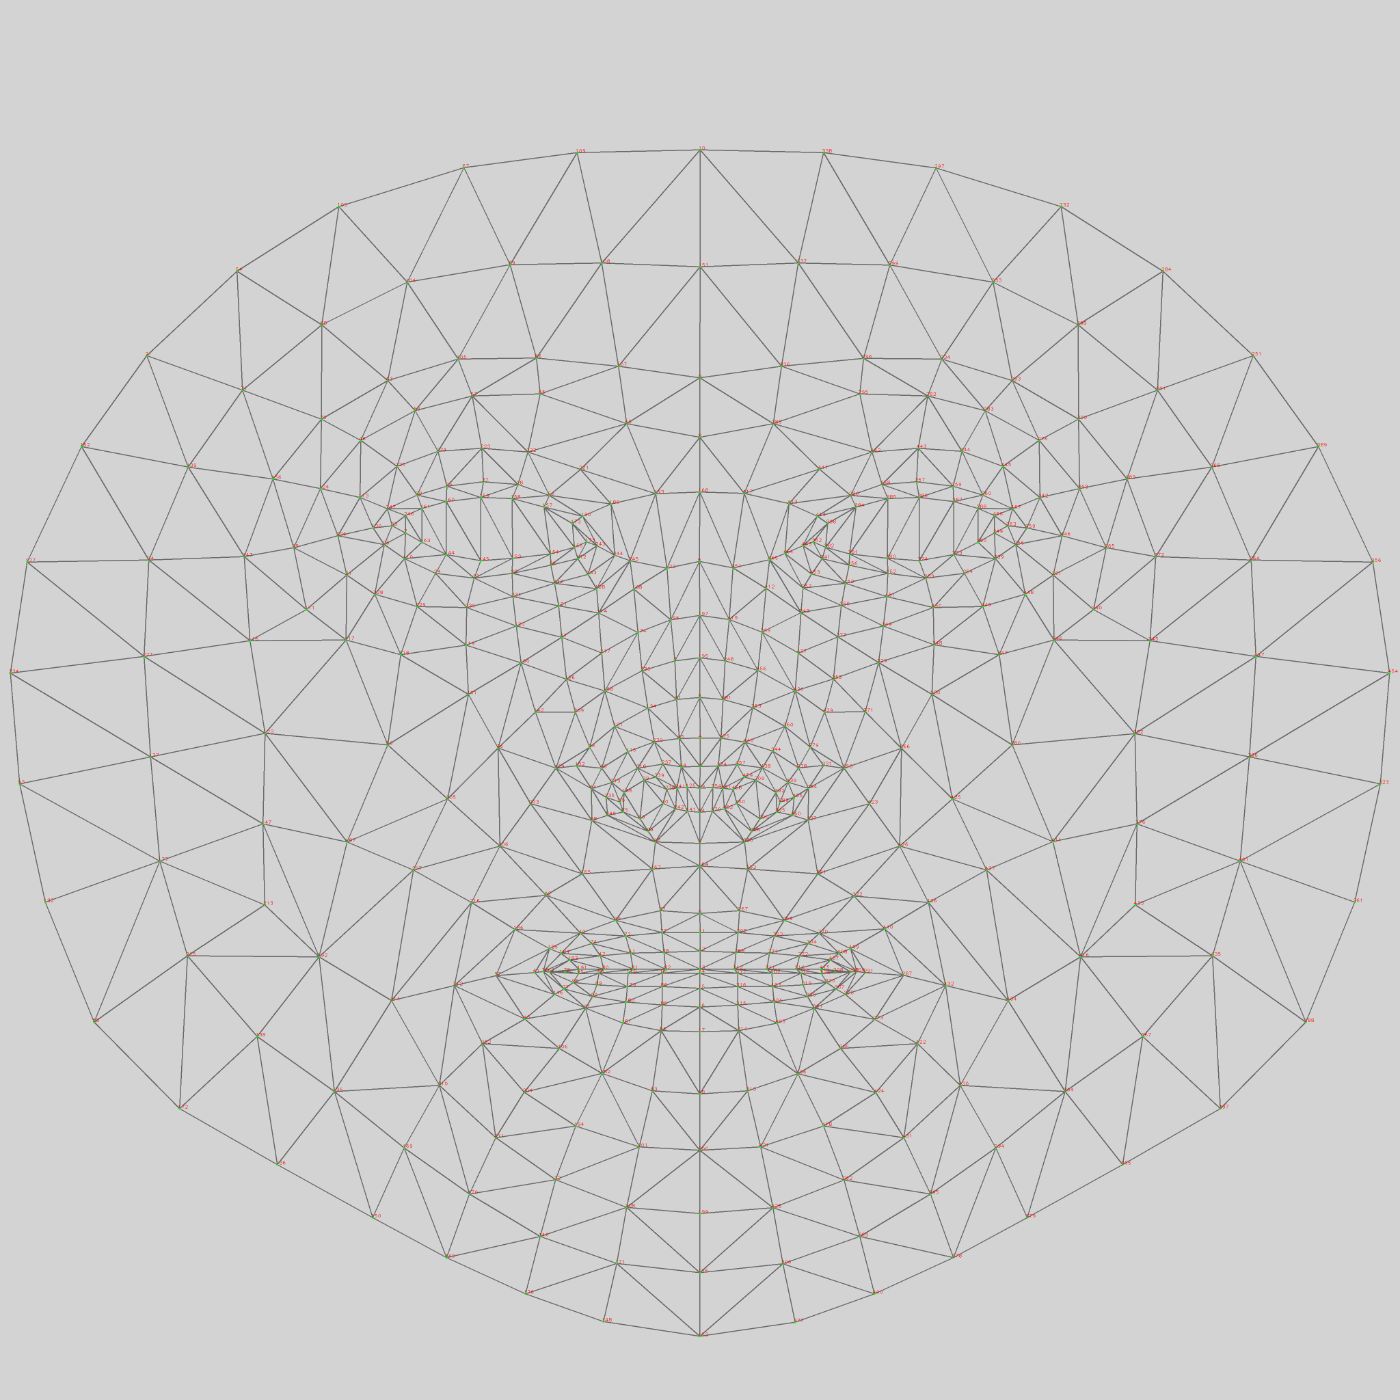 source: https://github.com/google/mediapipe/blob/a908d668c730da128dfa8d9f6bd25d519d006692/mediapipe/modules/face_geometry/data/canonical_face_model_uv_visualization.png